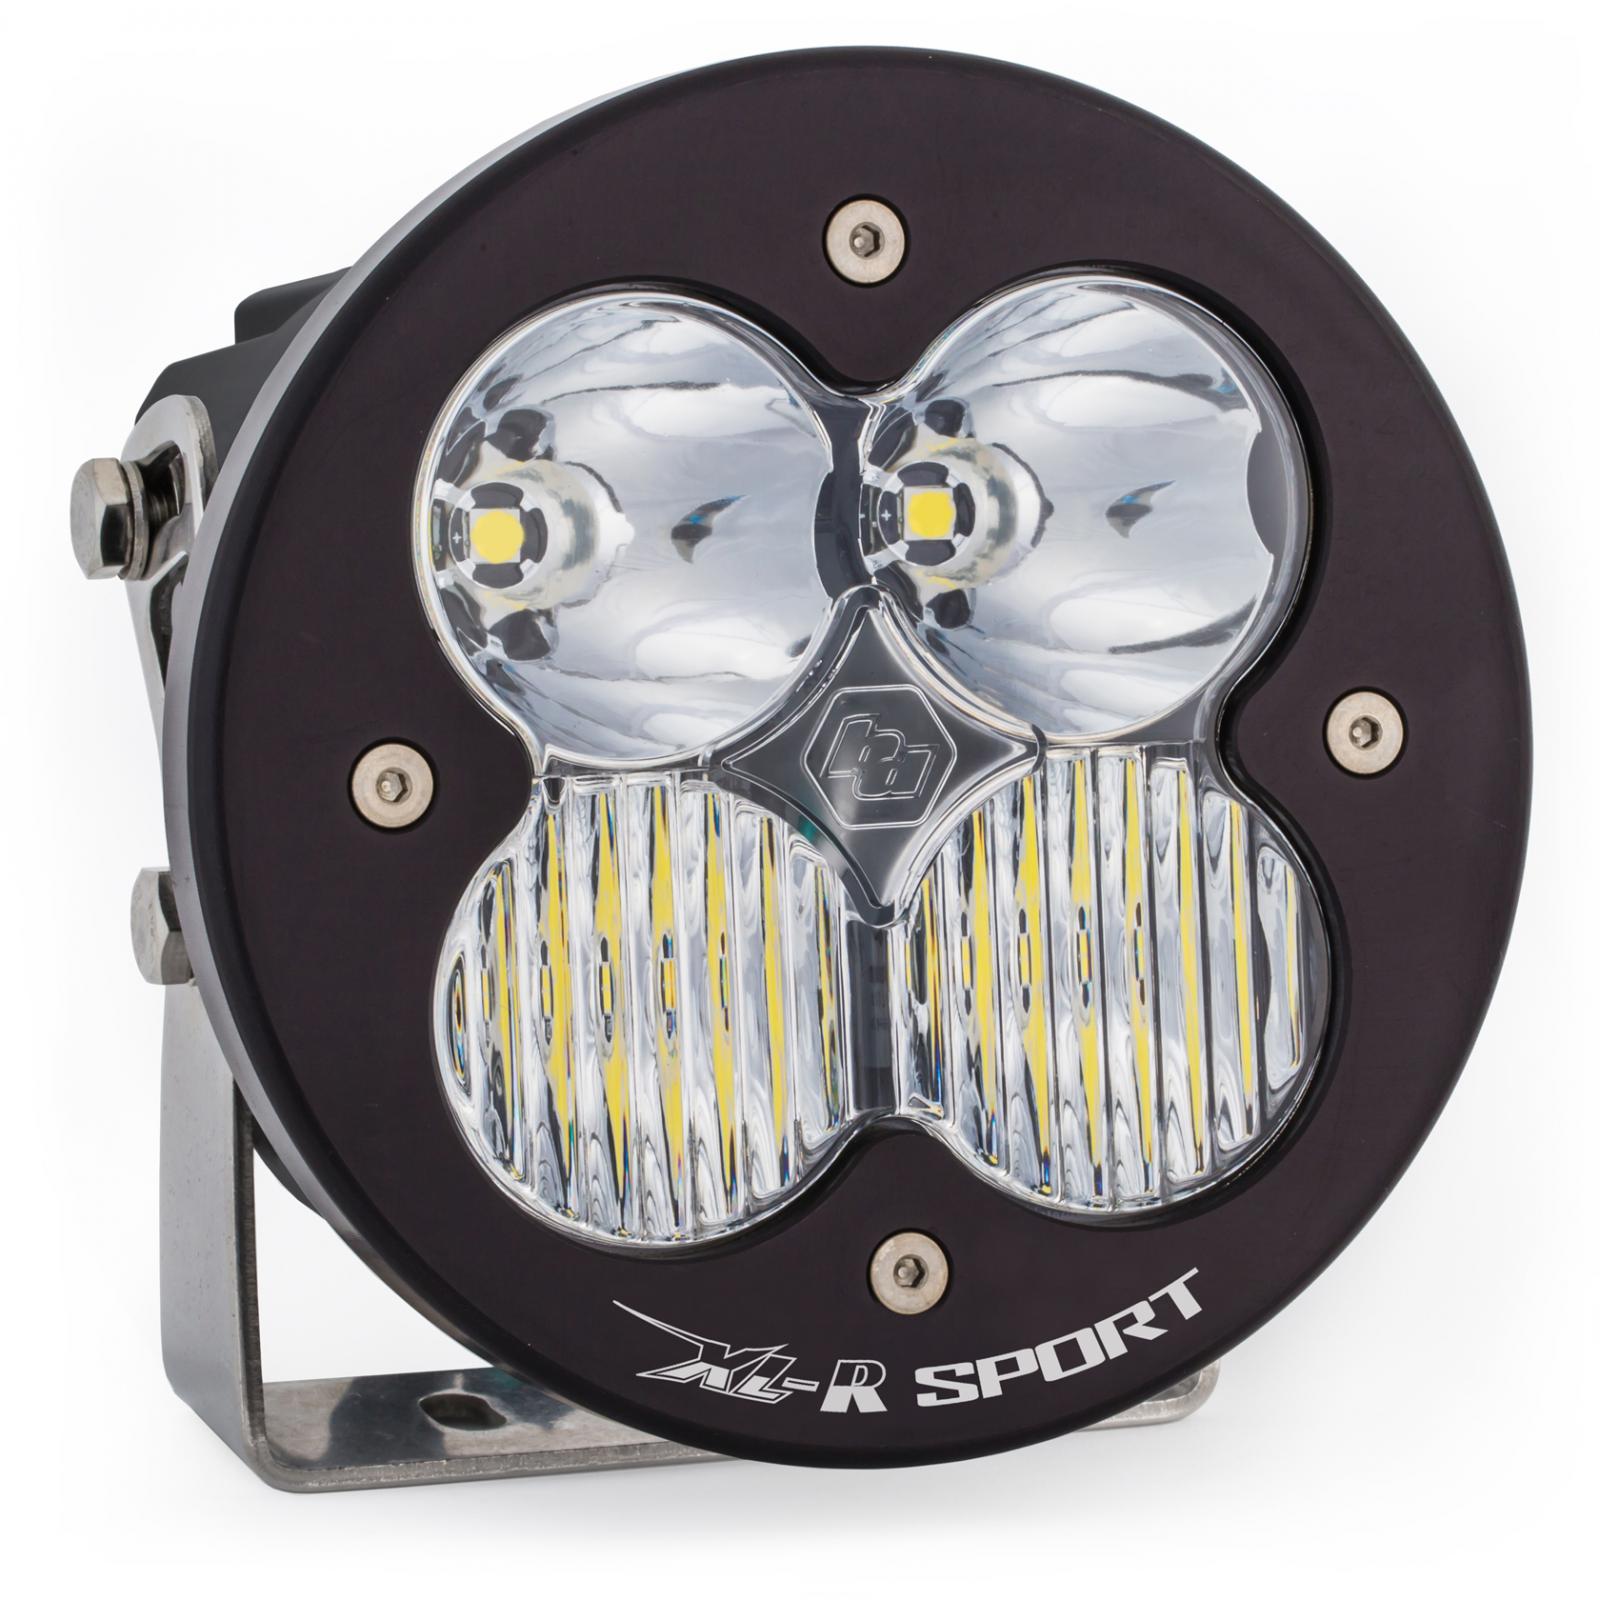 Baja Designs 570003 LED Light Pods Clear Lens Spot XL R Sport Driving/Combo Baja Designs - Truck Part Superstore